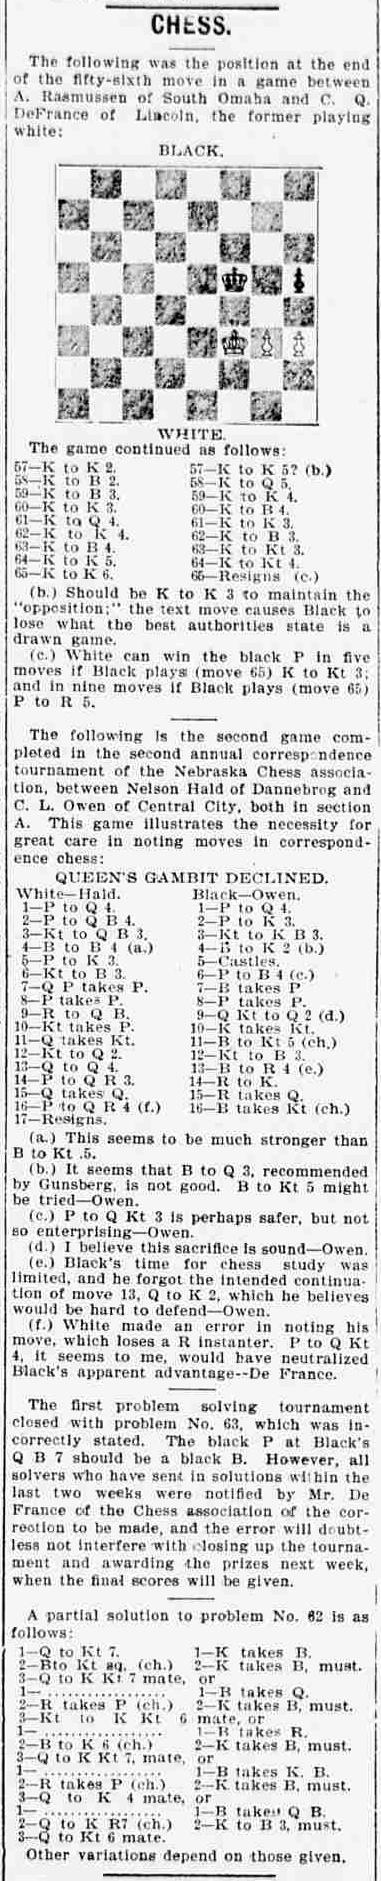 1899.03.26-01 Omaha Daily Bee.jpg